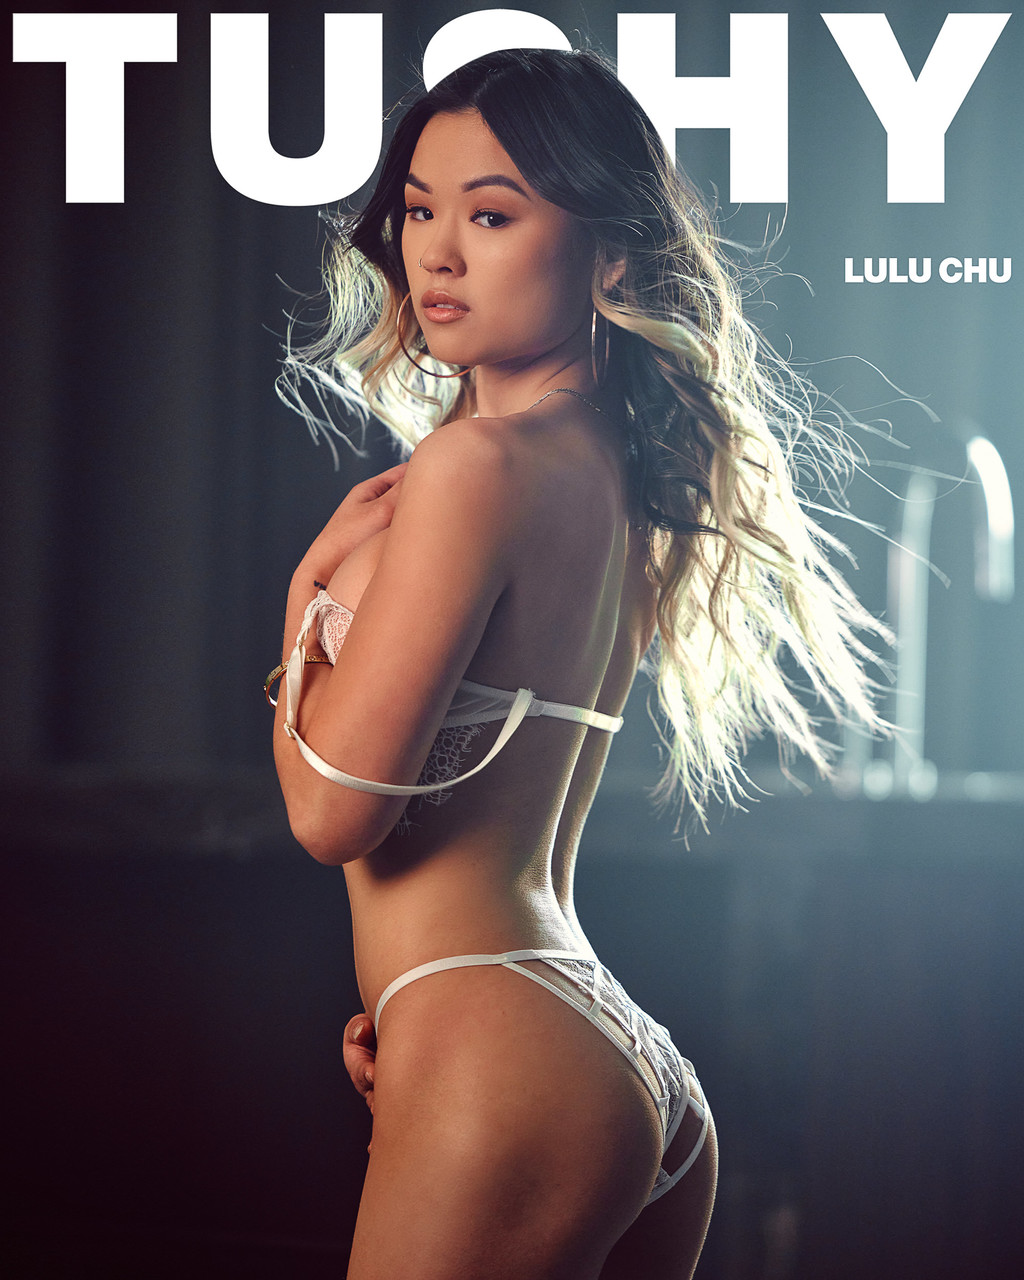 Petite Asian Lulu Chu gets anal fucked & gives an ass to mouth cock licking foto pornográfica #425580936 | Tushy Pics, Lulu Chu, Mick Blue, Asian, pornografia móvel